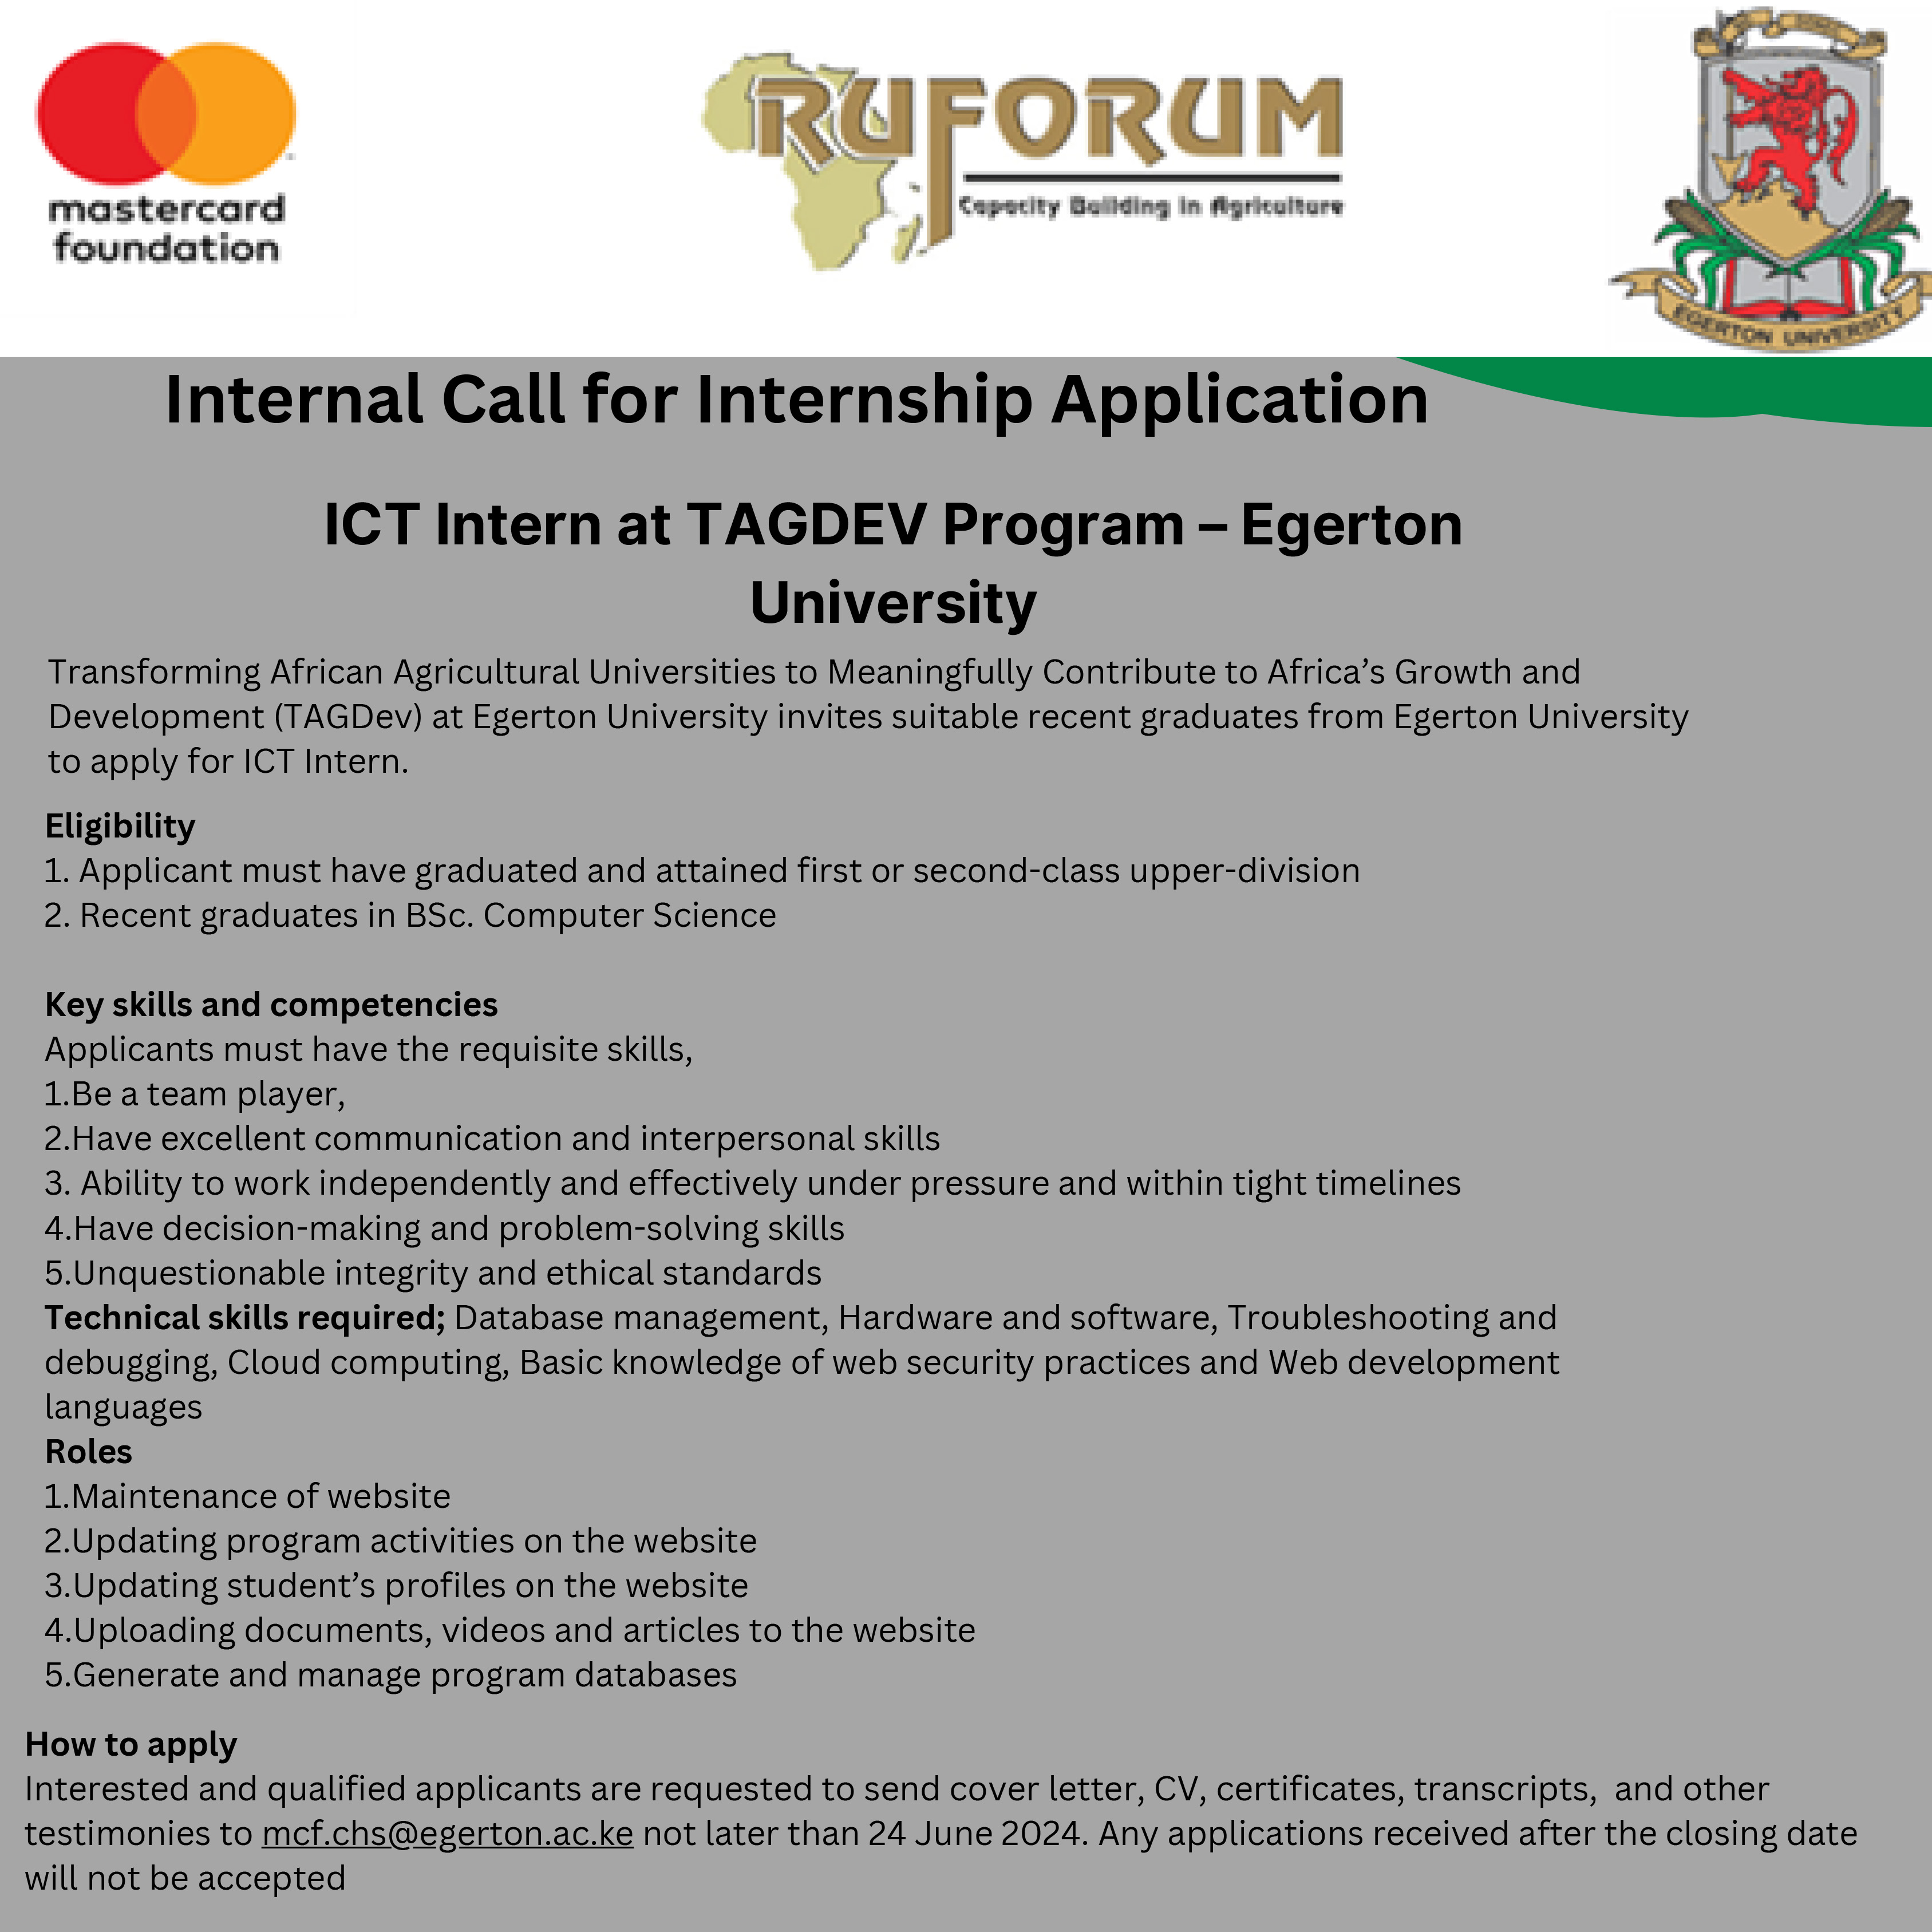 Internal Call for Internship Application